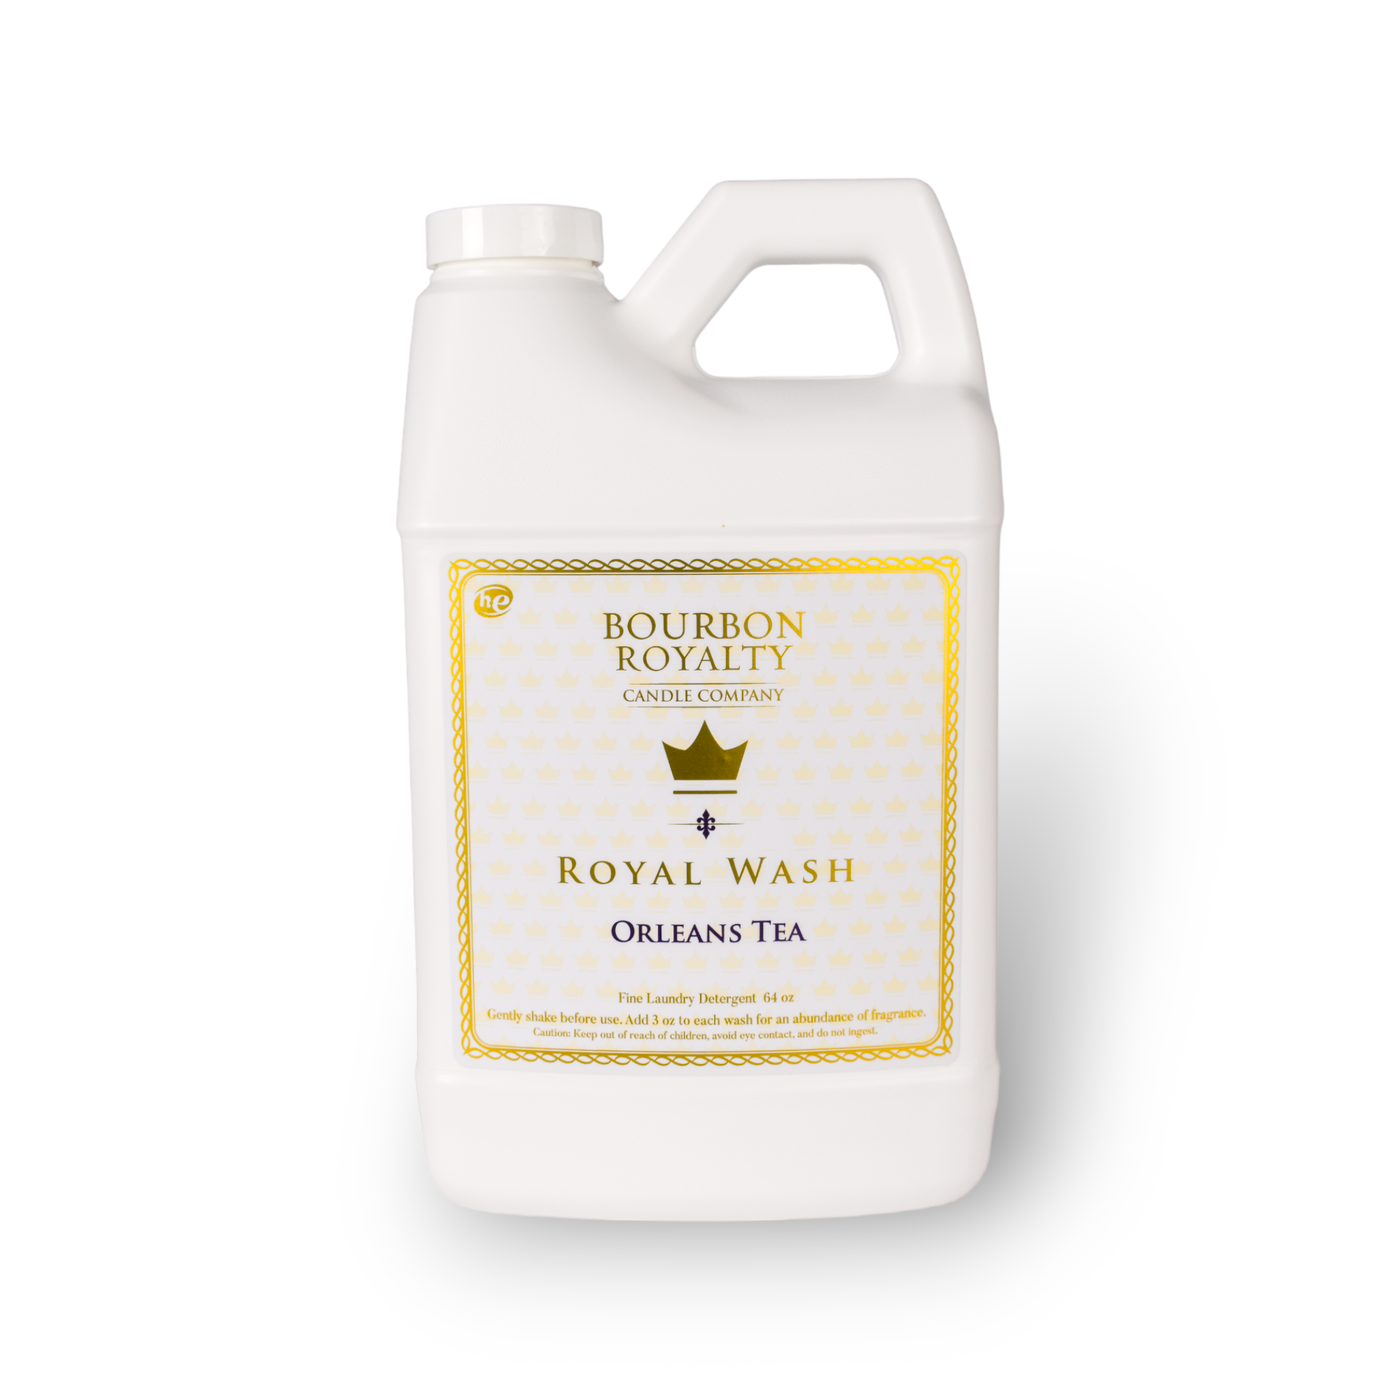 64 oz Royal Wash: Queen of Bourbon